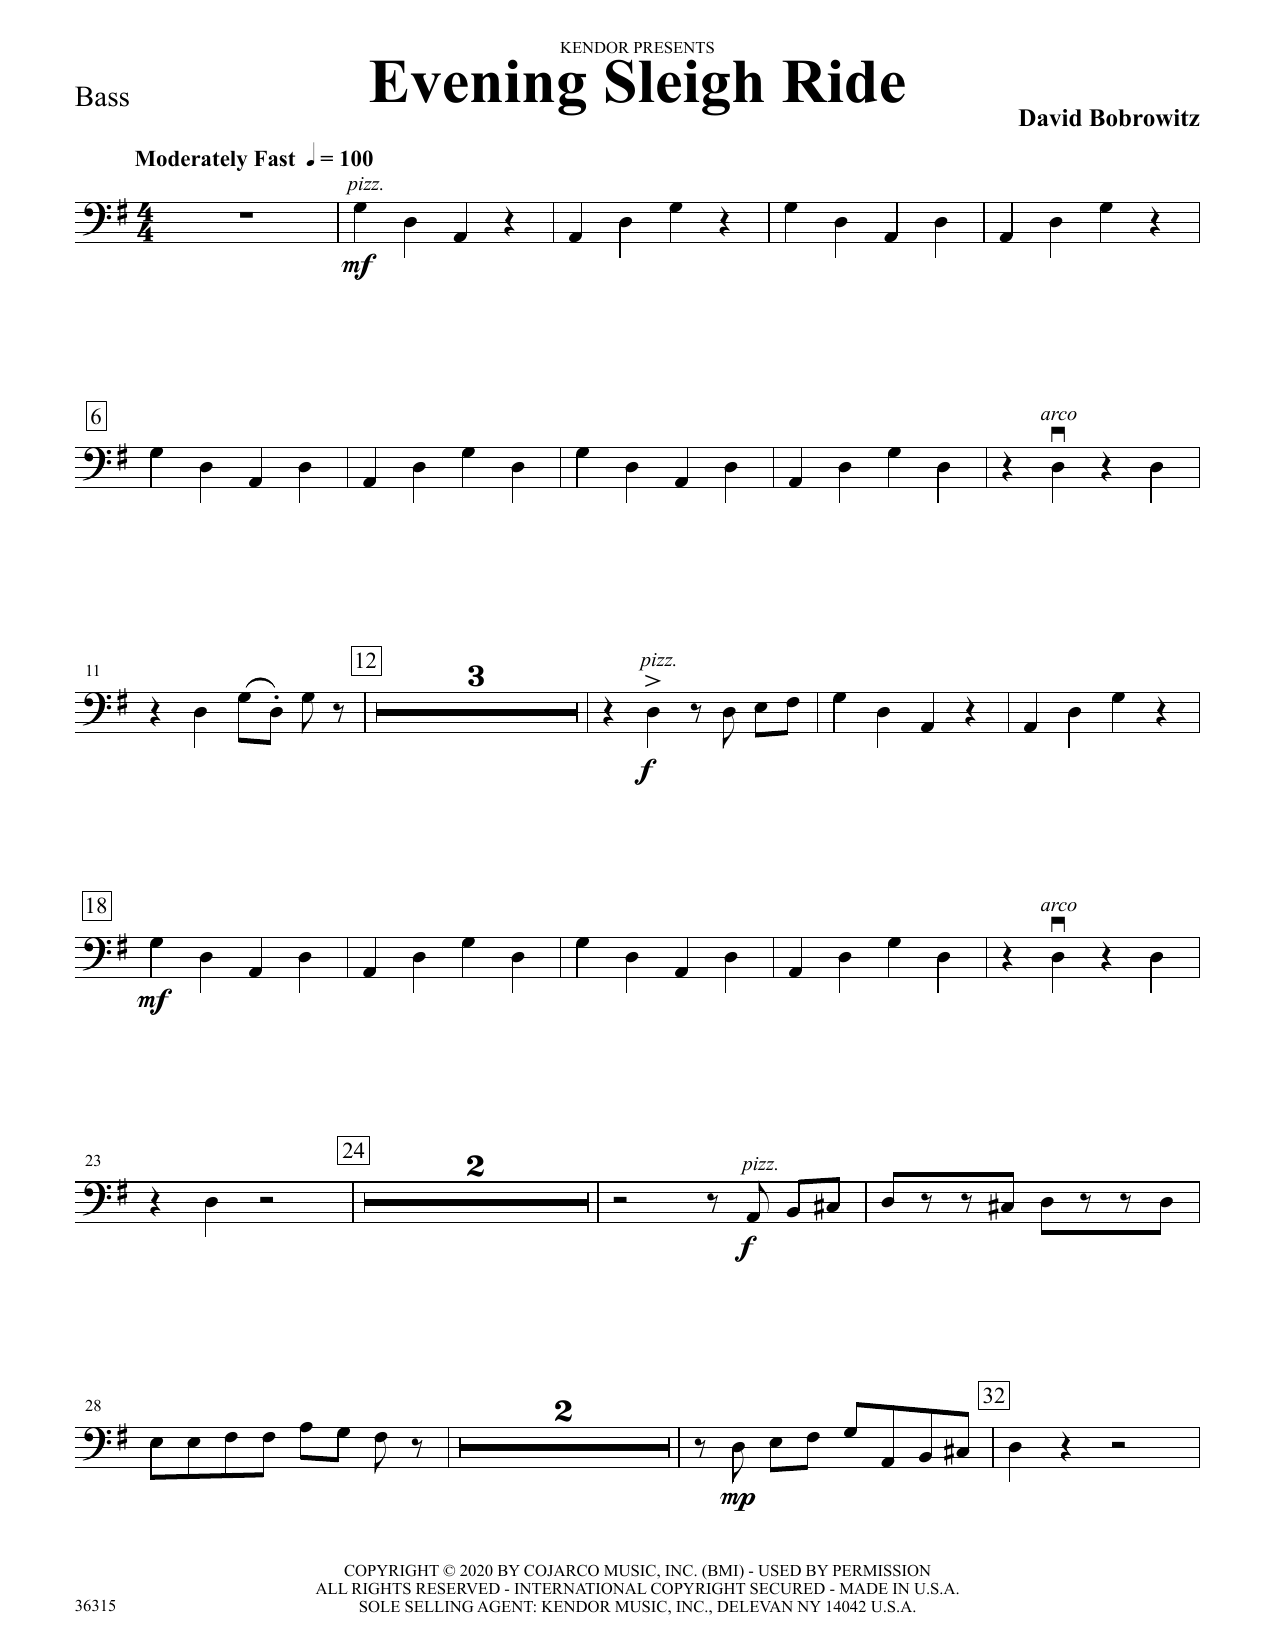 Download David Bobrowitz Evening Sleigh Ride - Bass Sheet Music